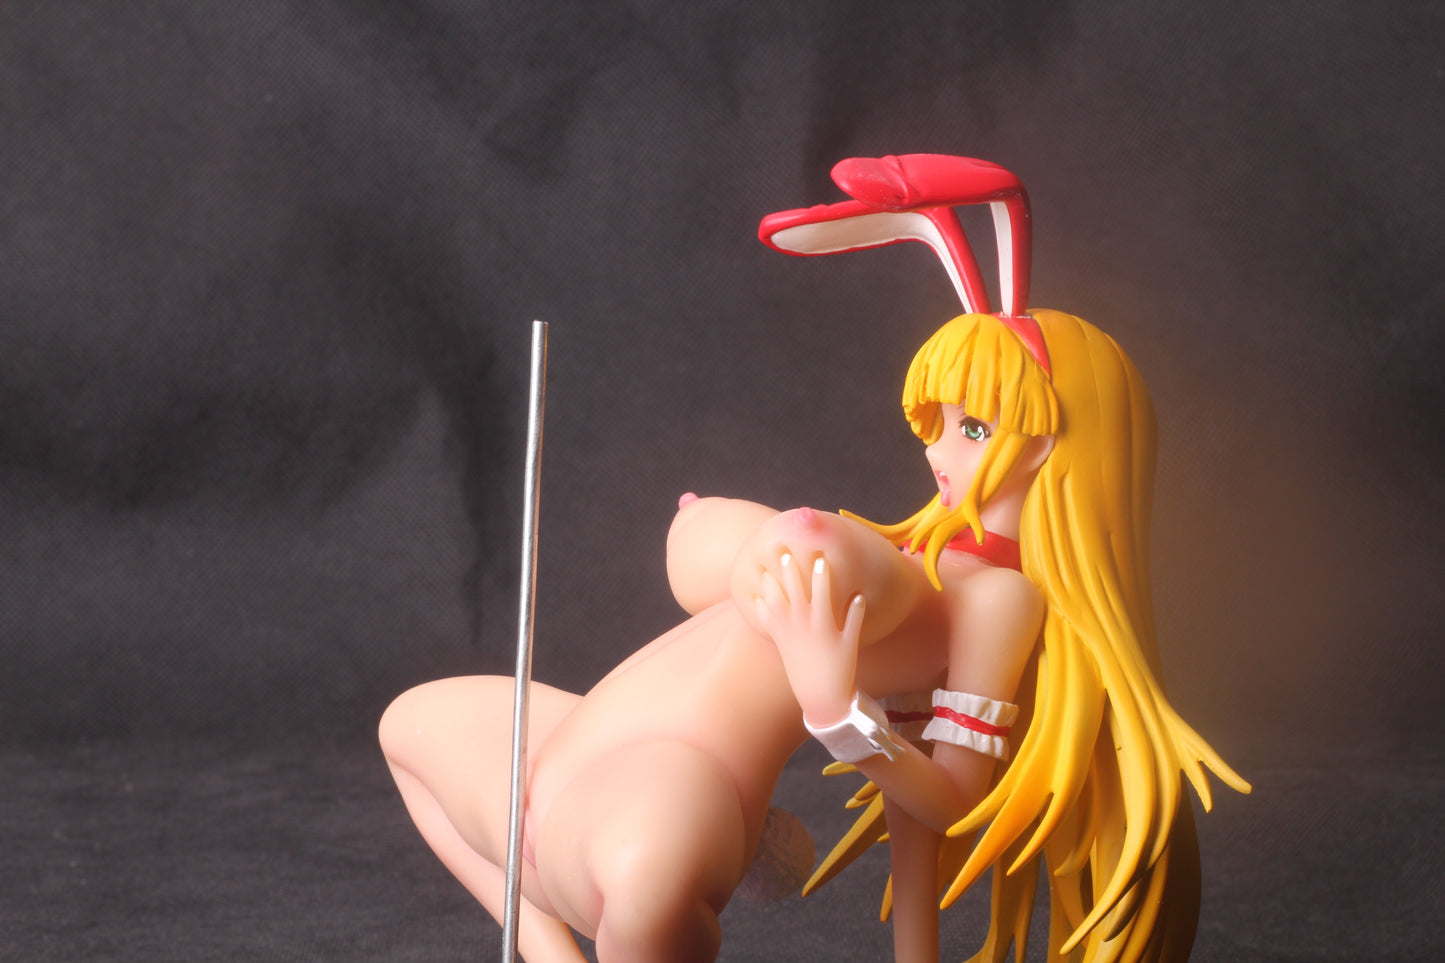 Japanese anime Sexy Rio RainbowGate Elle Adams bunny Ver. IRIS 1/6 naked anime figure